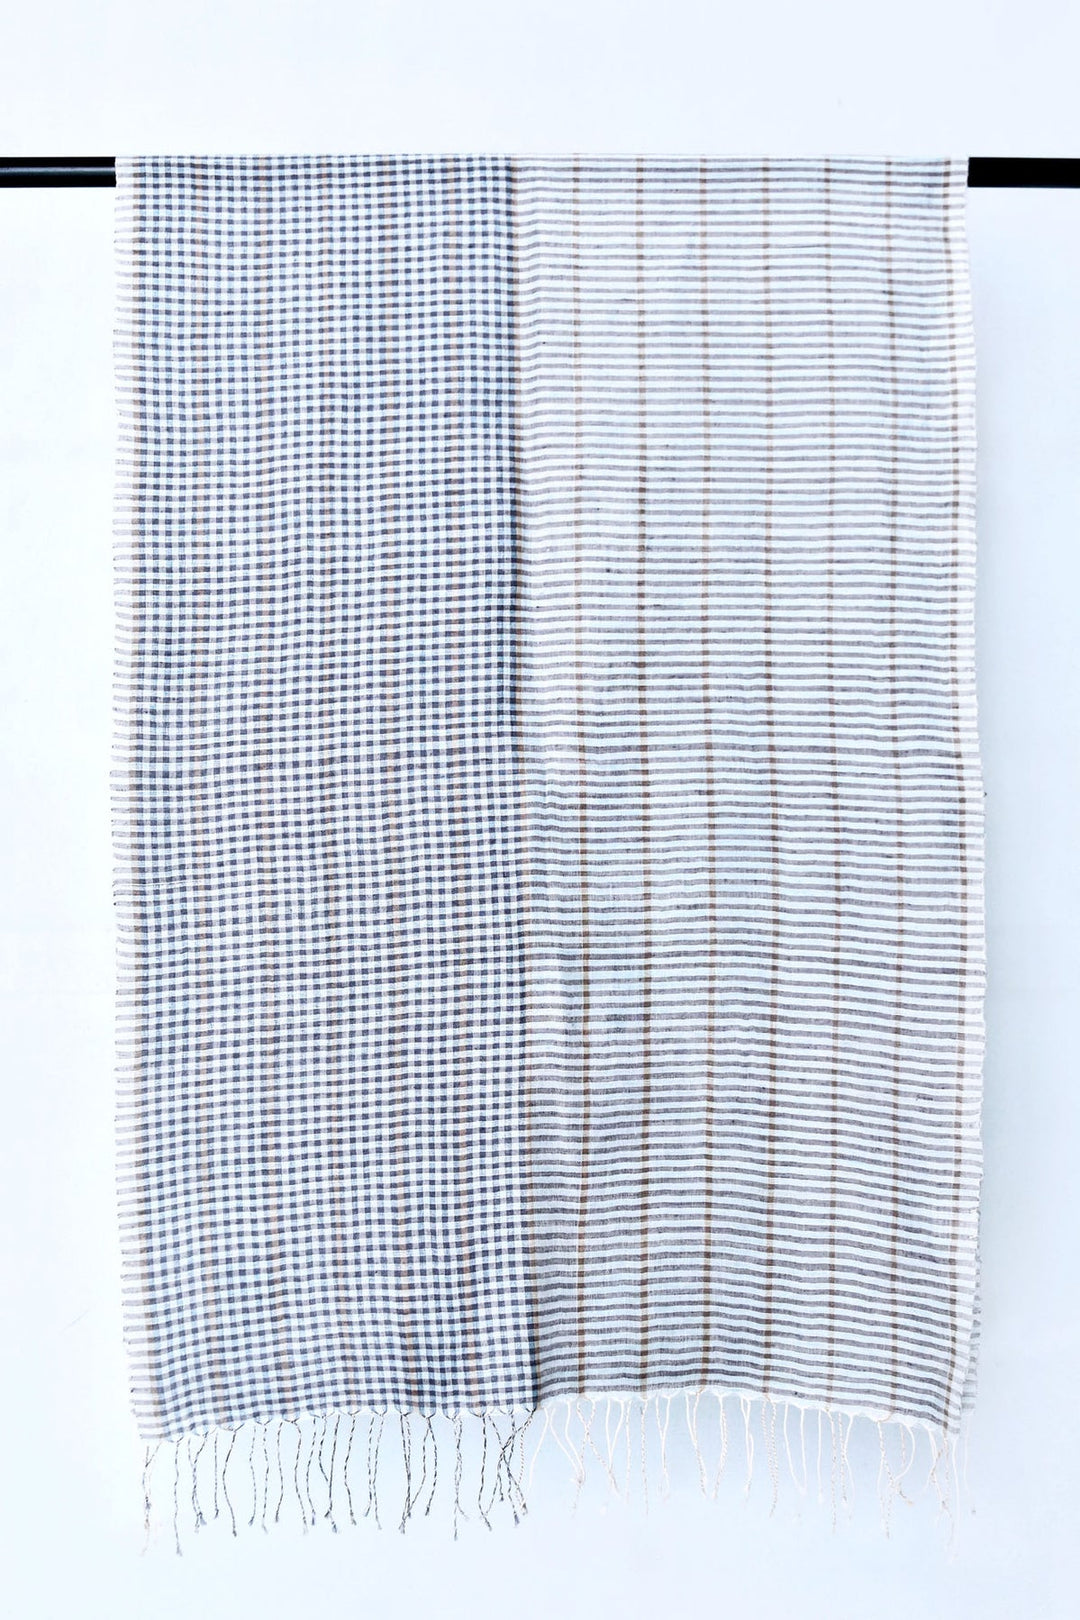 Blue Checkered Cotton Stole for Versatile Fashion | Check Mate Handwoven Cotton Stole - Blue & Brown